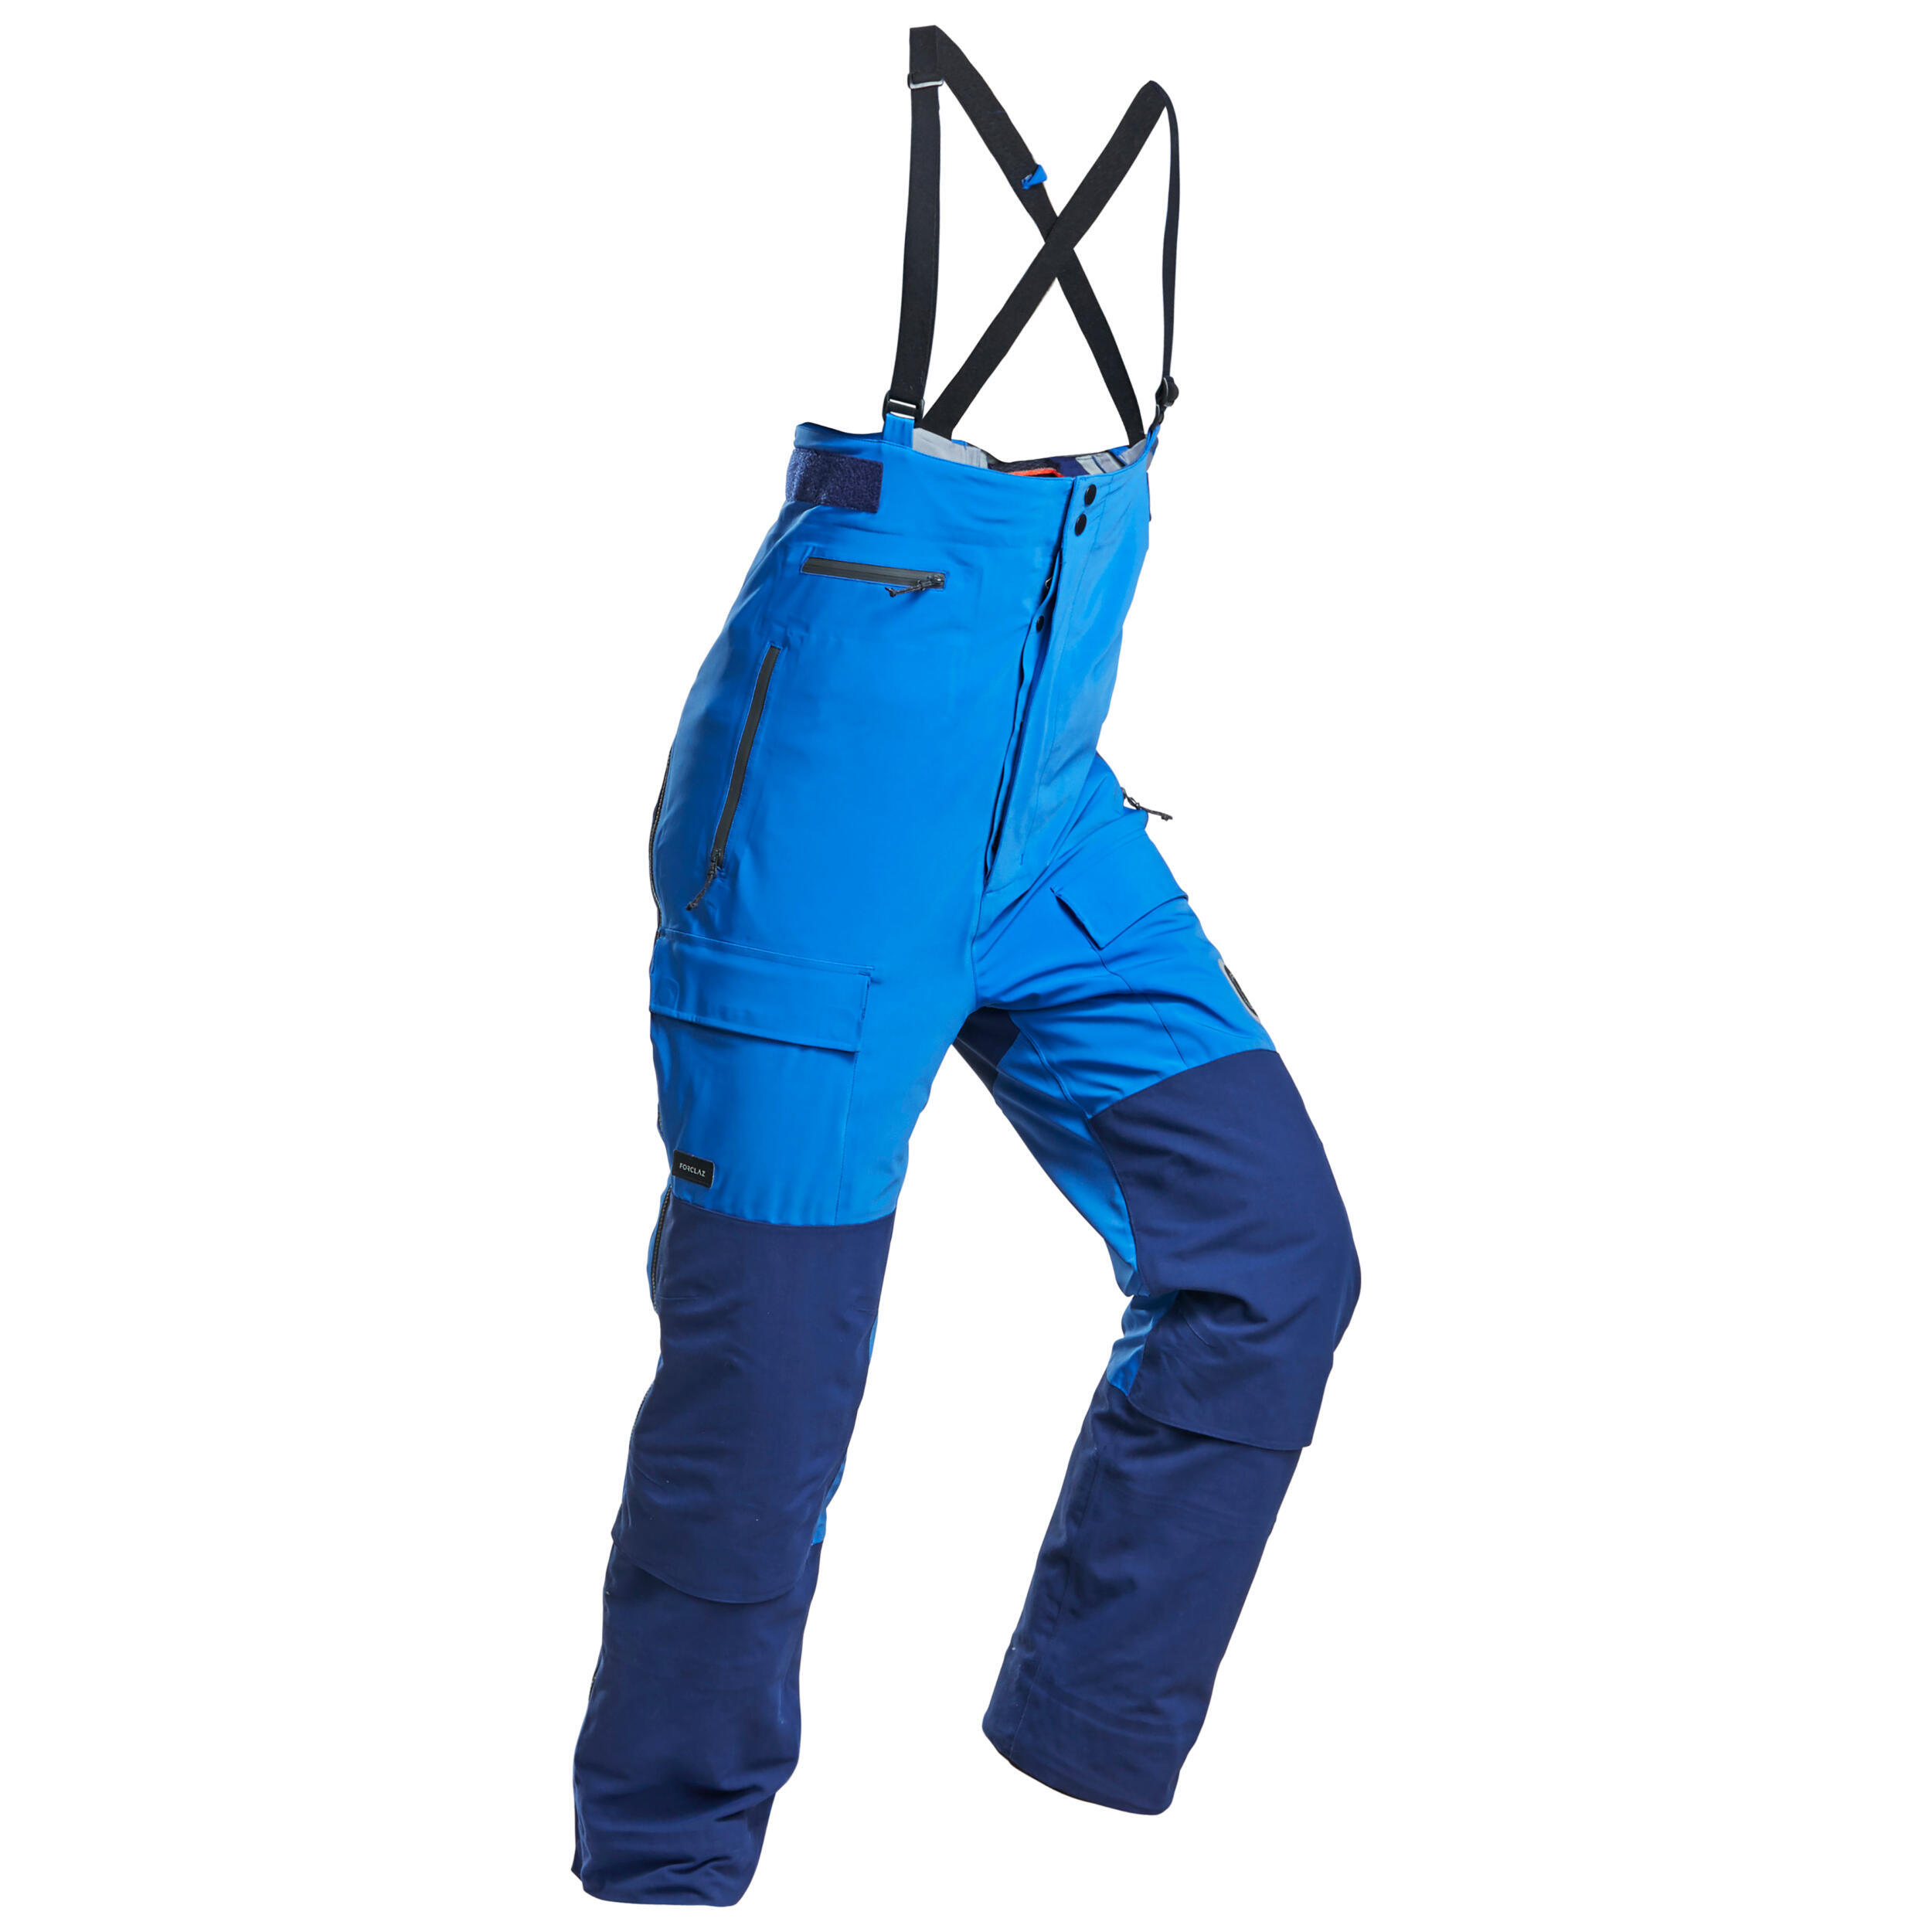 Warm and waterproof 3in1 trekking trousers - Artic 900 - Unisex 1/14